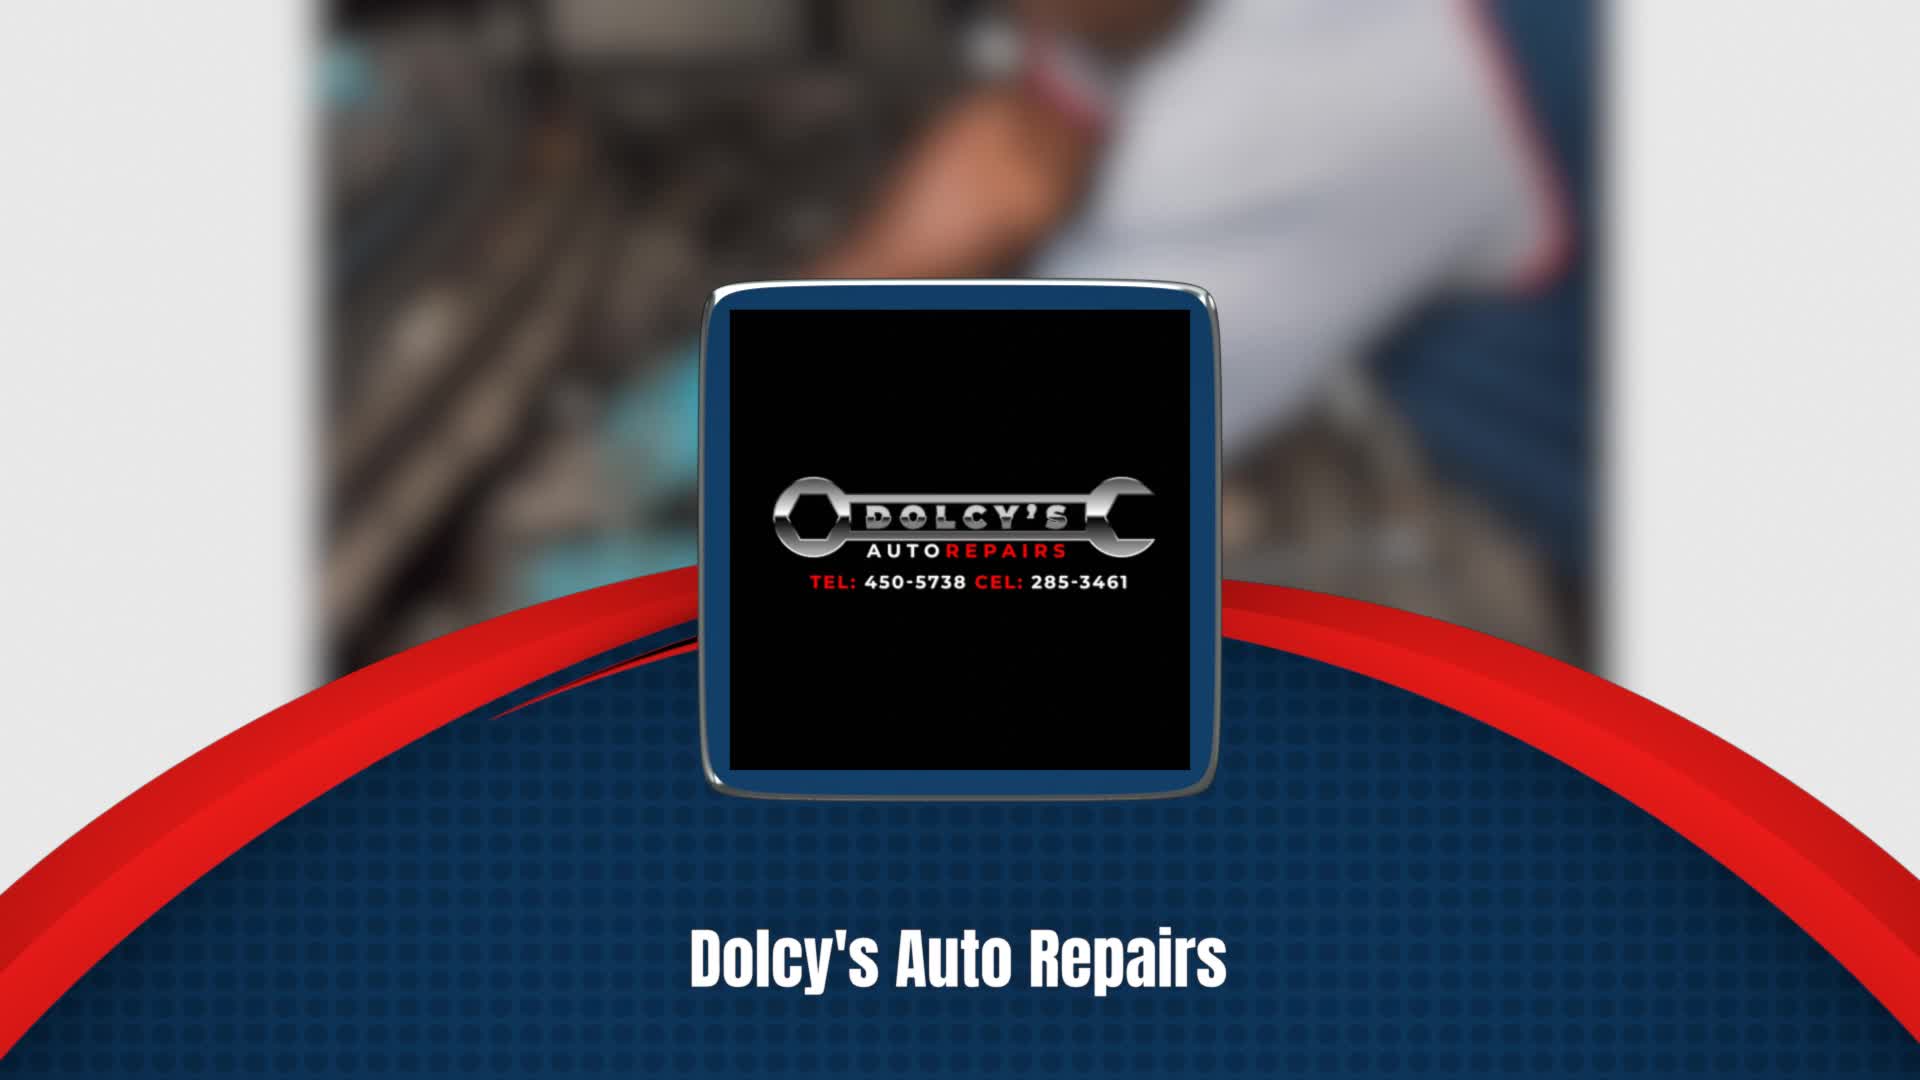 Dolcy's Auto Repairs - Auto Repairs